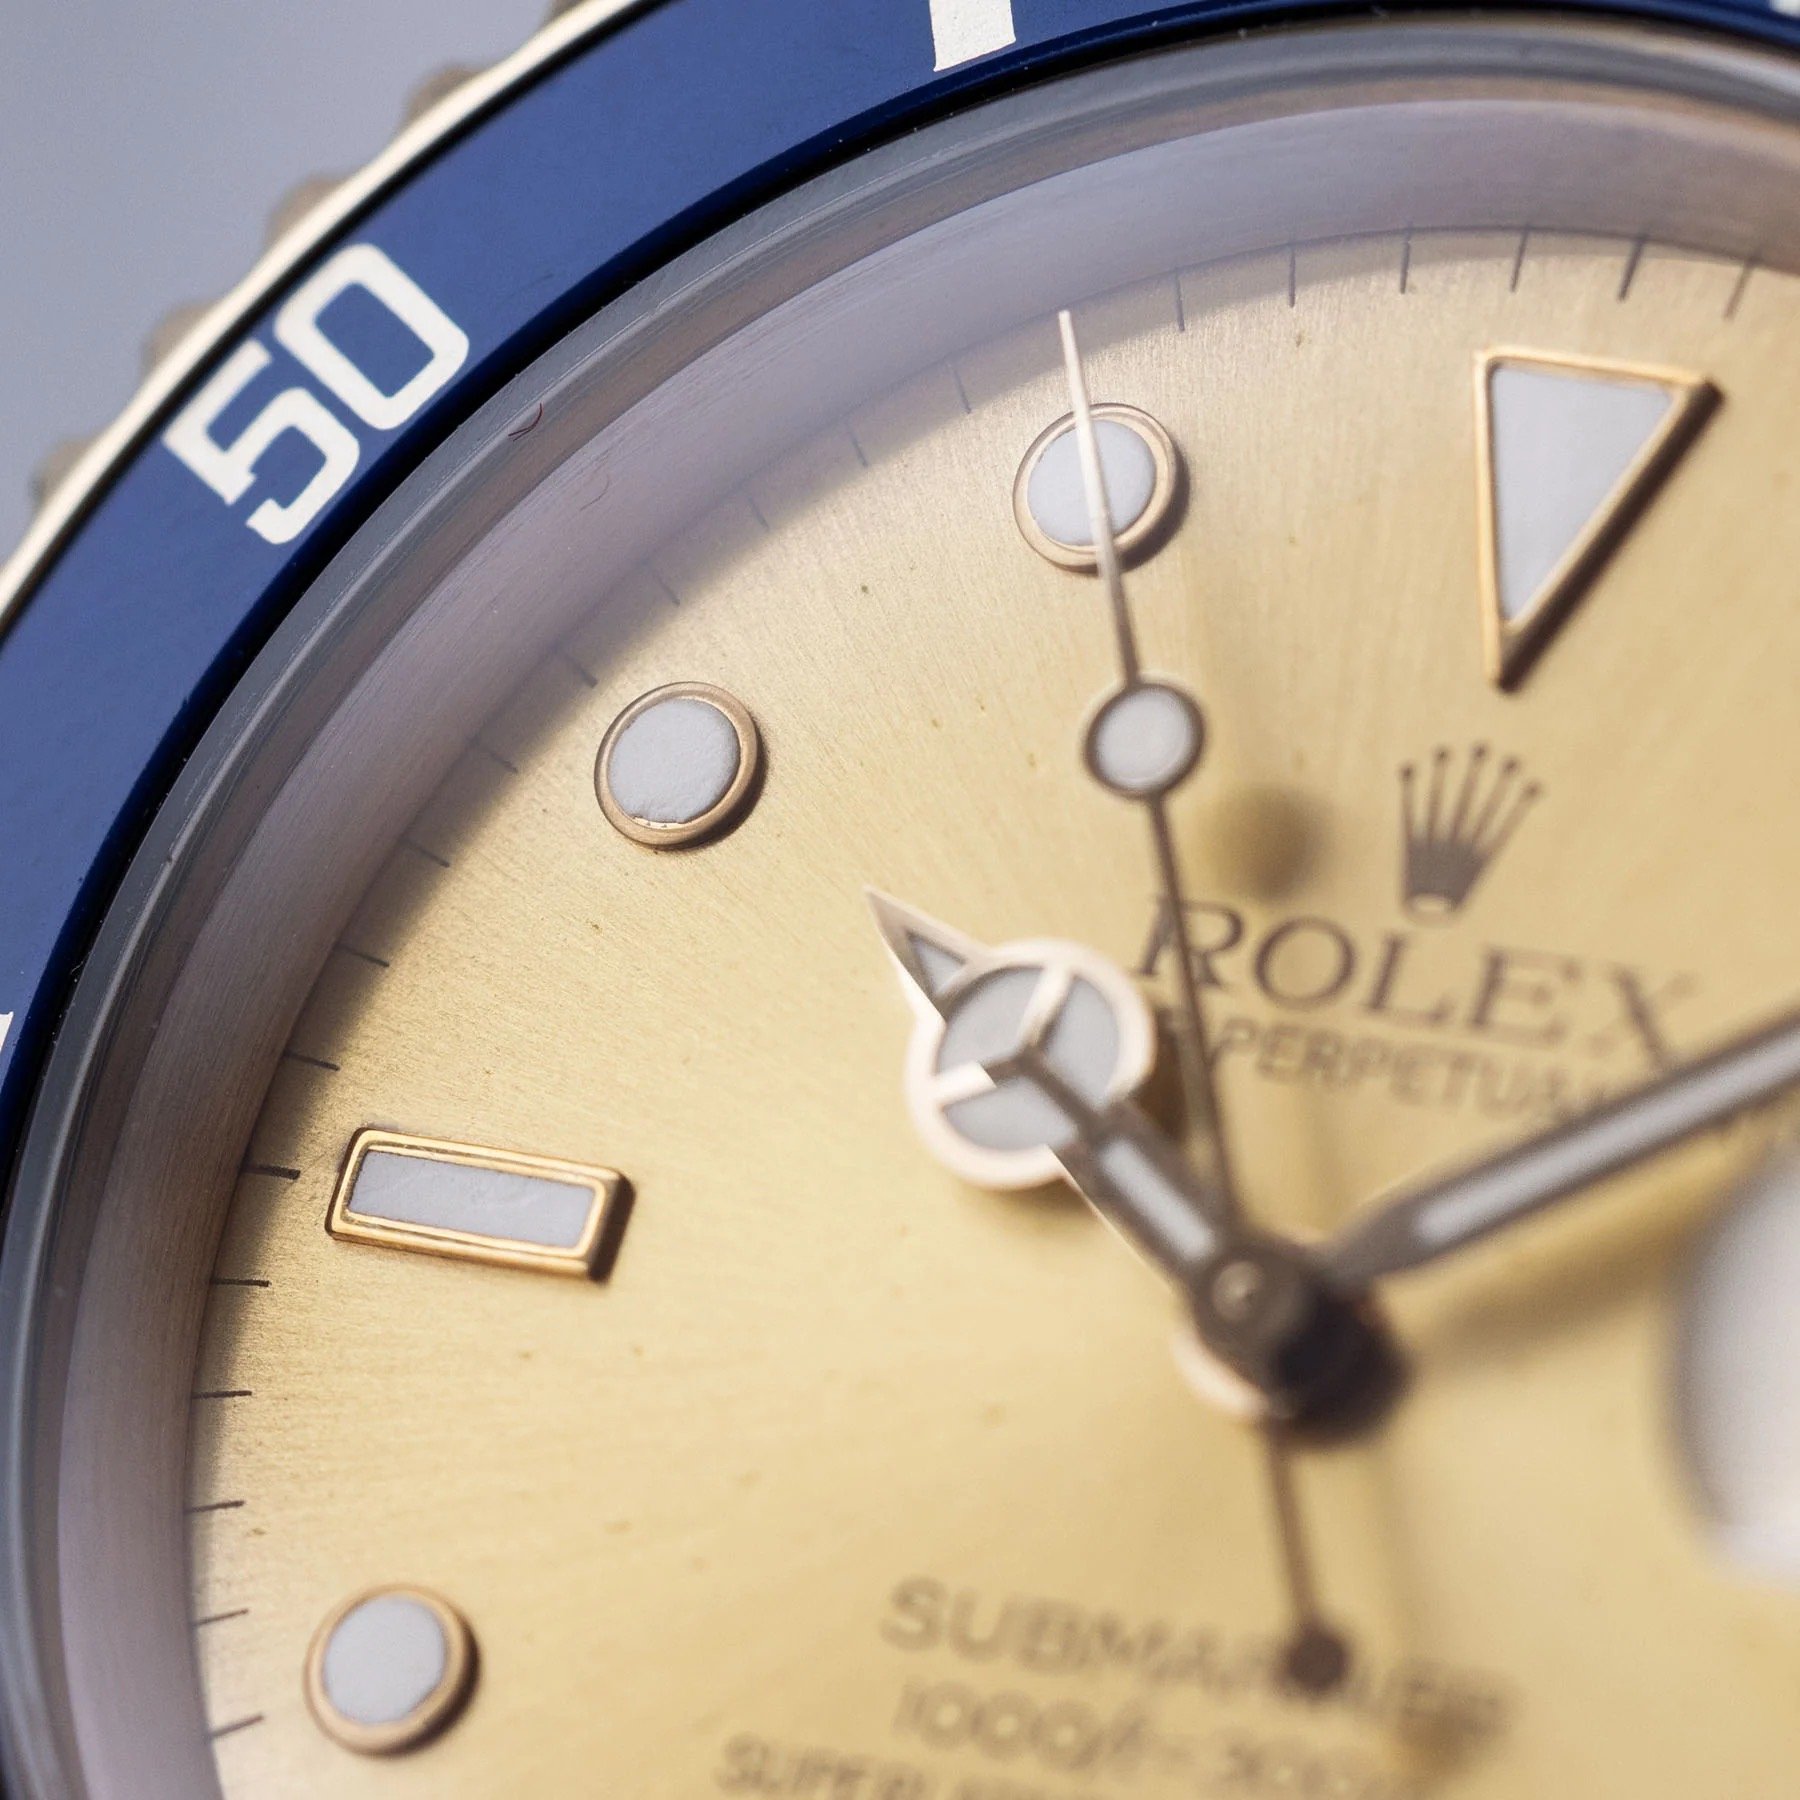 Rolex discolored dials Submariner 16808 tropical